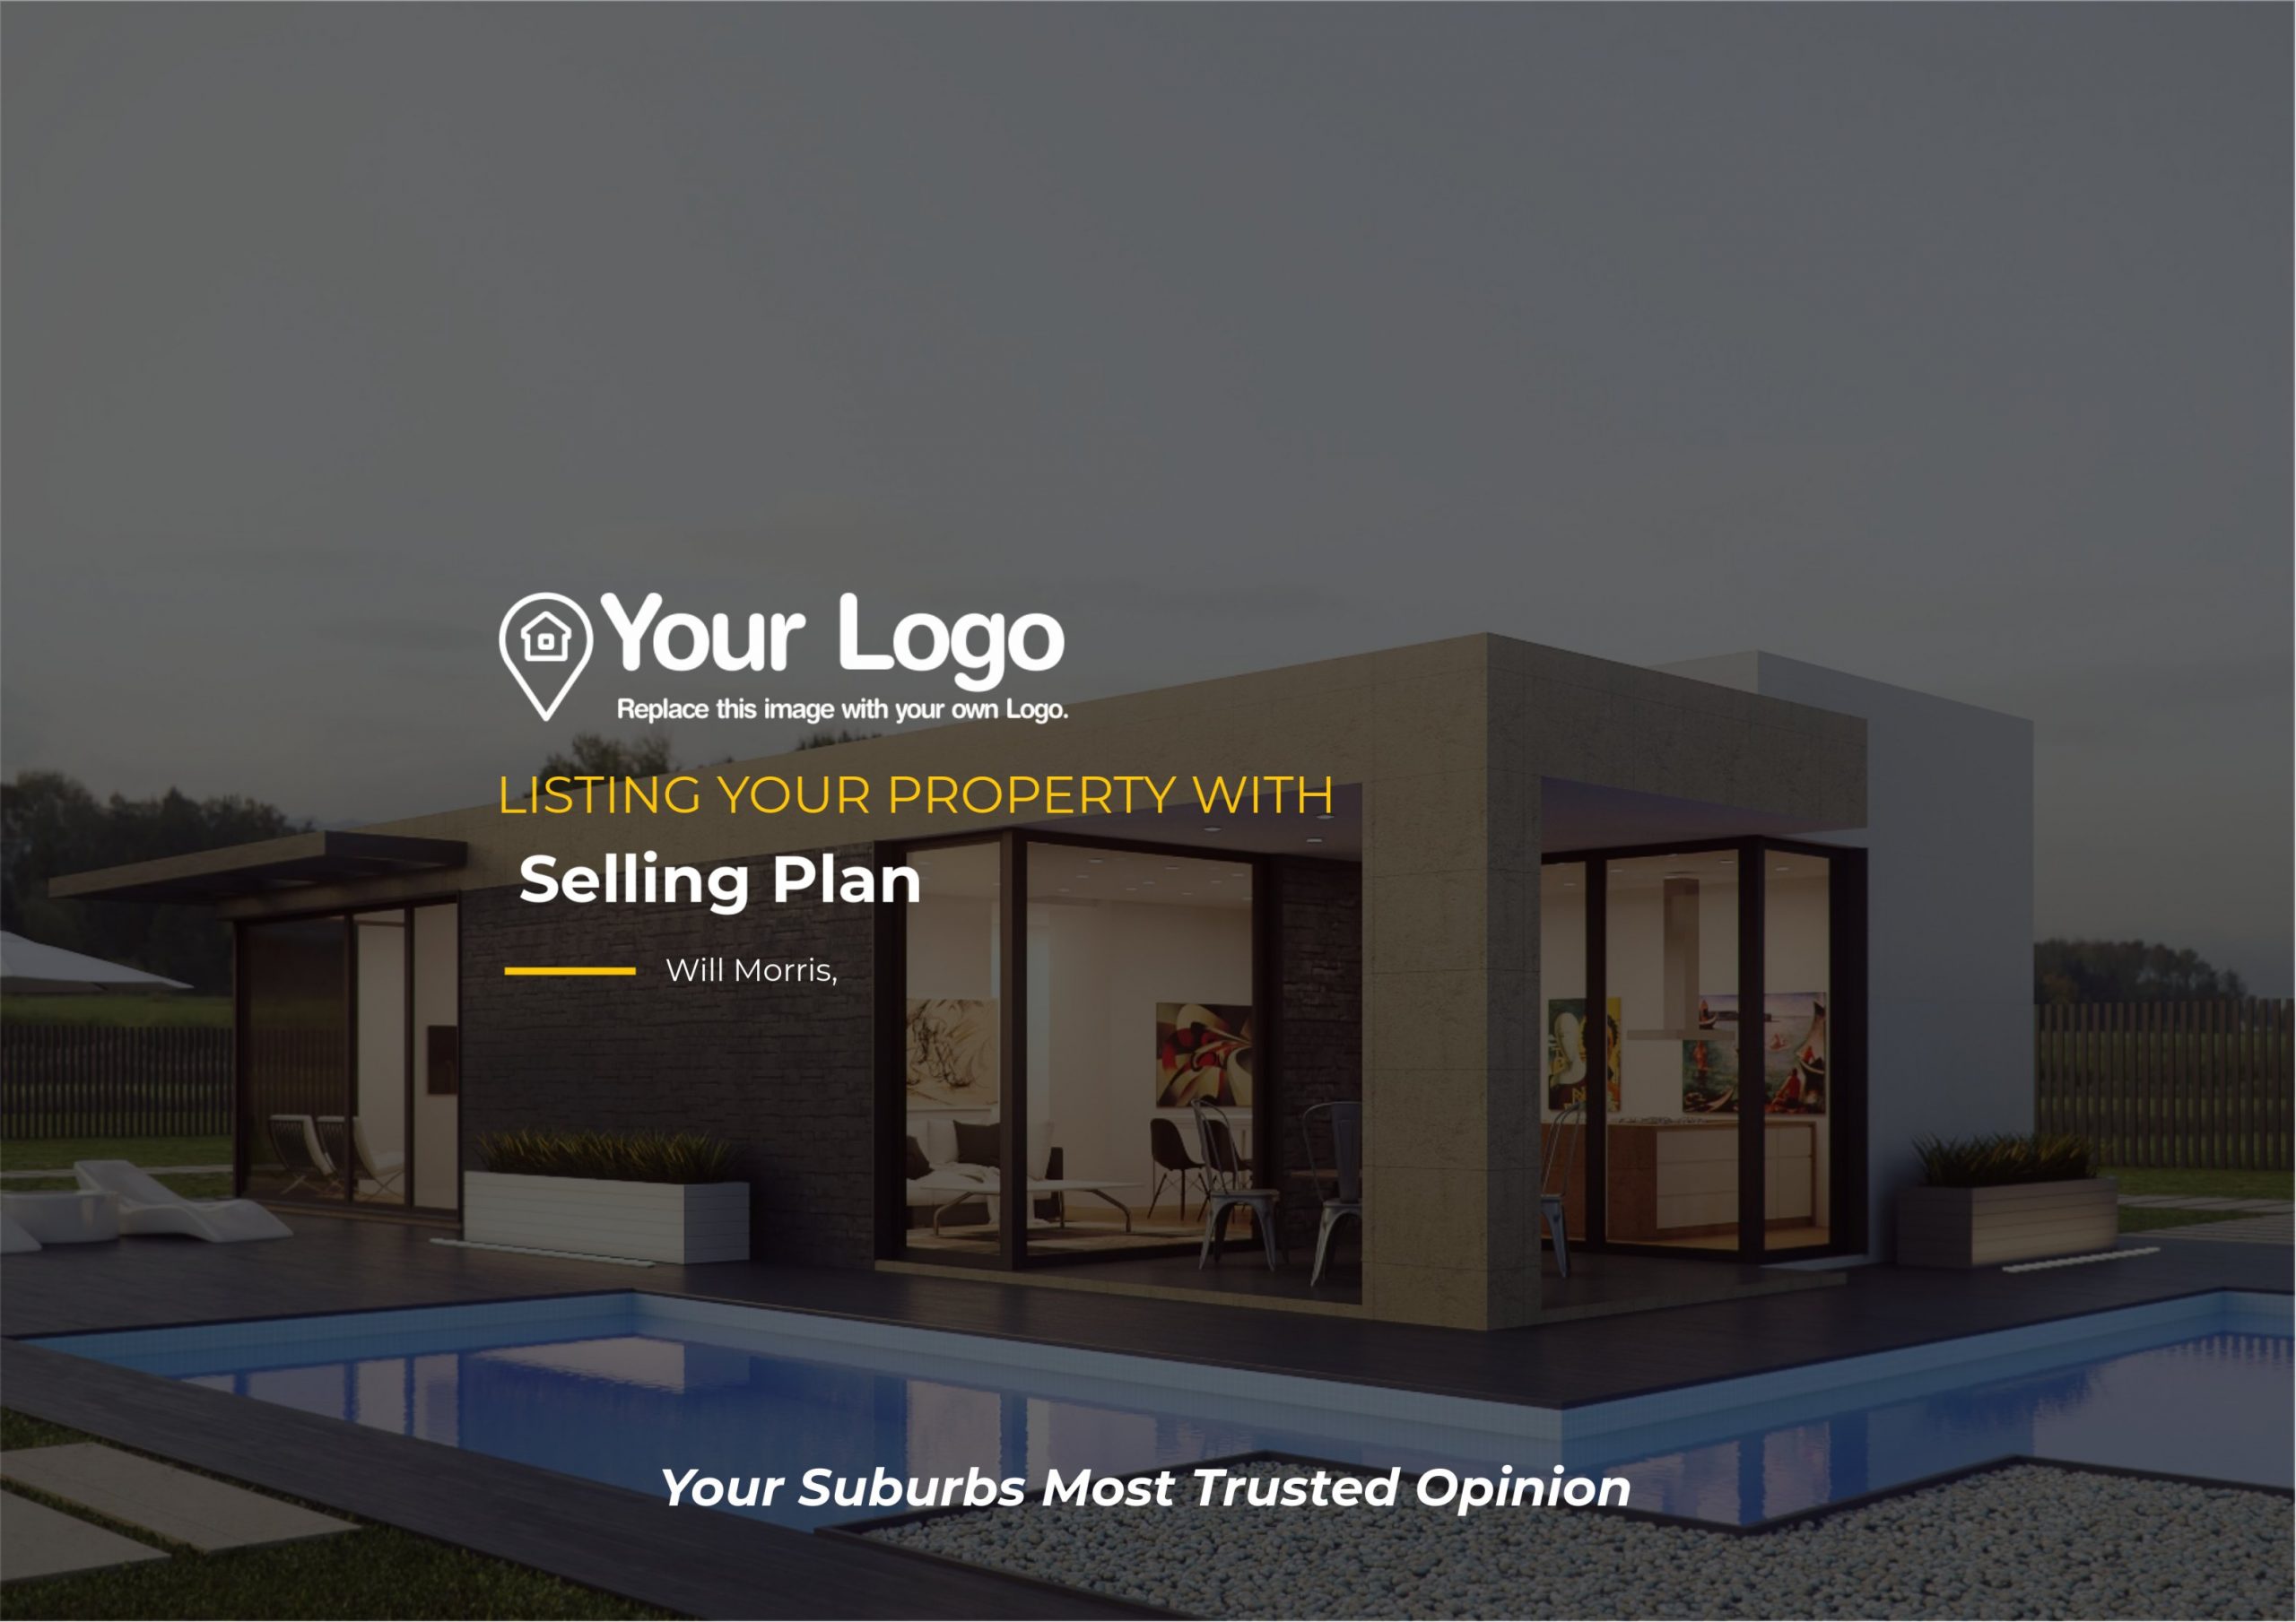 real estate presentation pdf